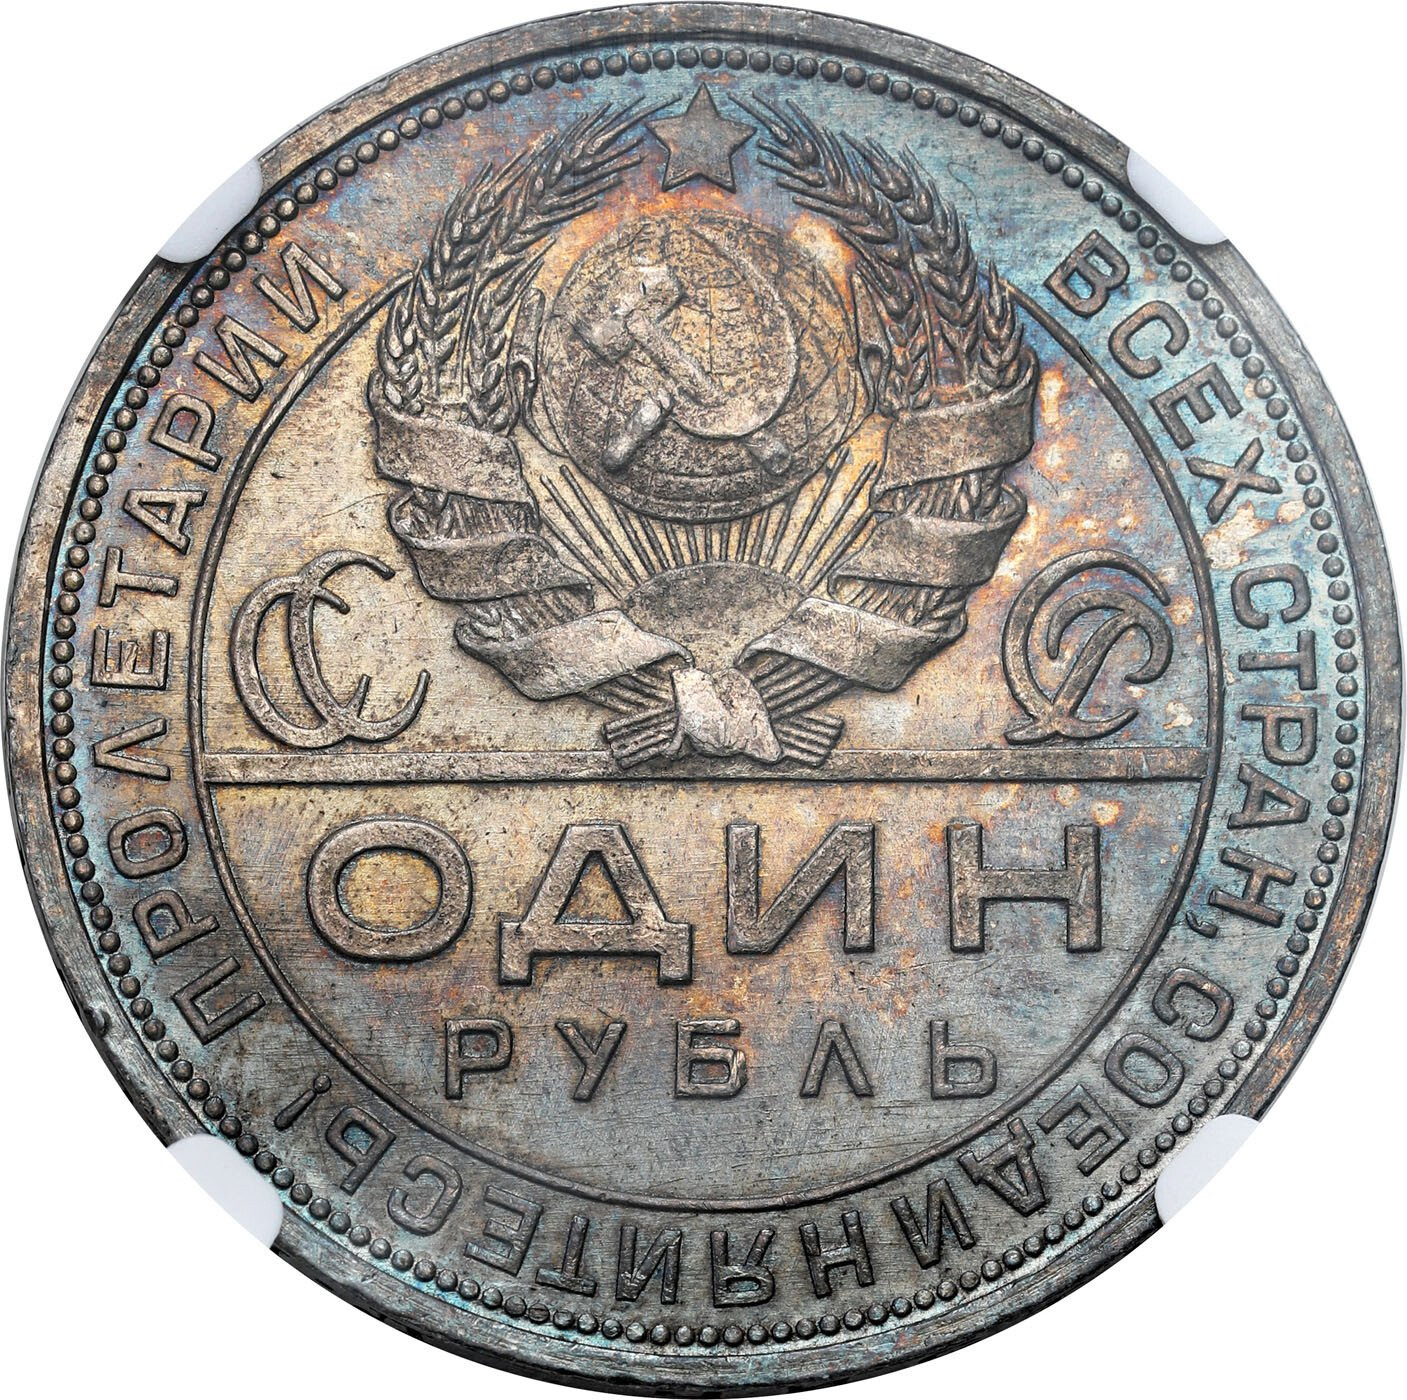 Rosja, ZSRR. Rubel 1924, Petersburg NGC MS64 - PIĘKNY